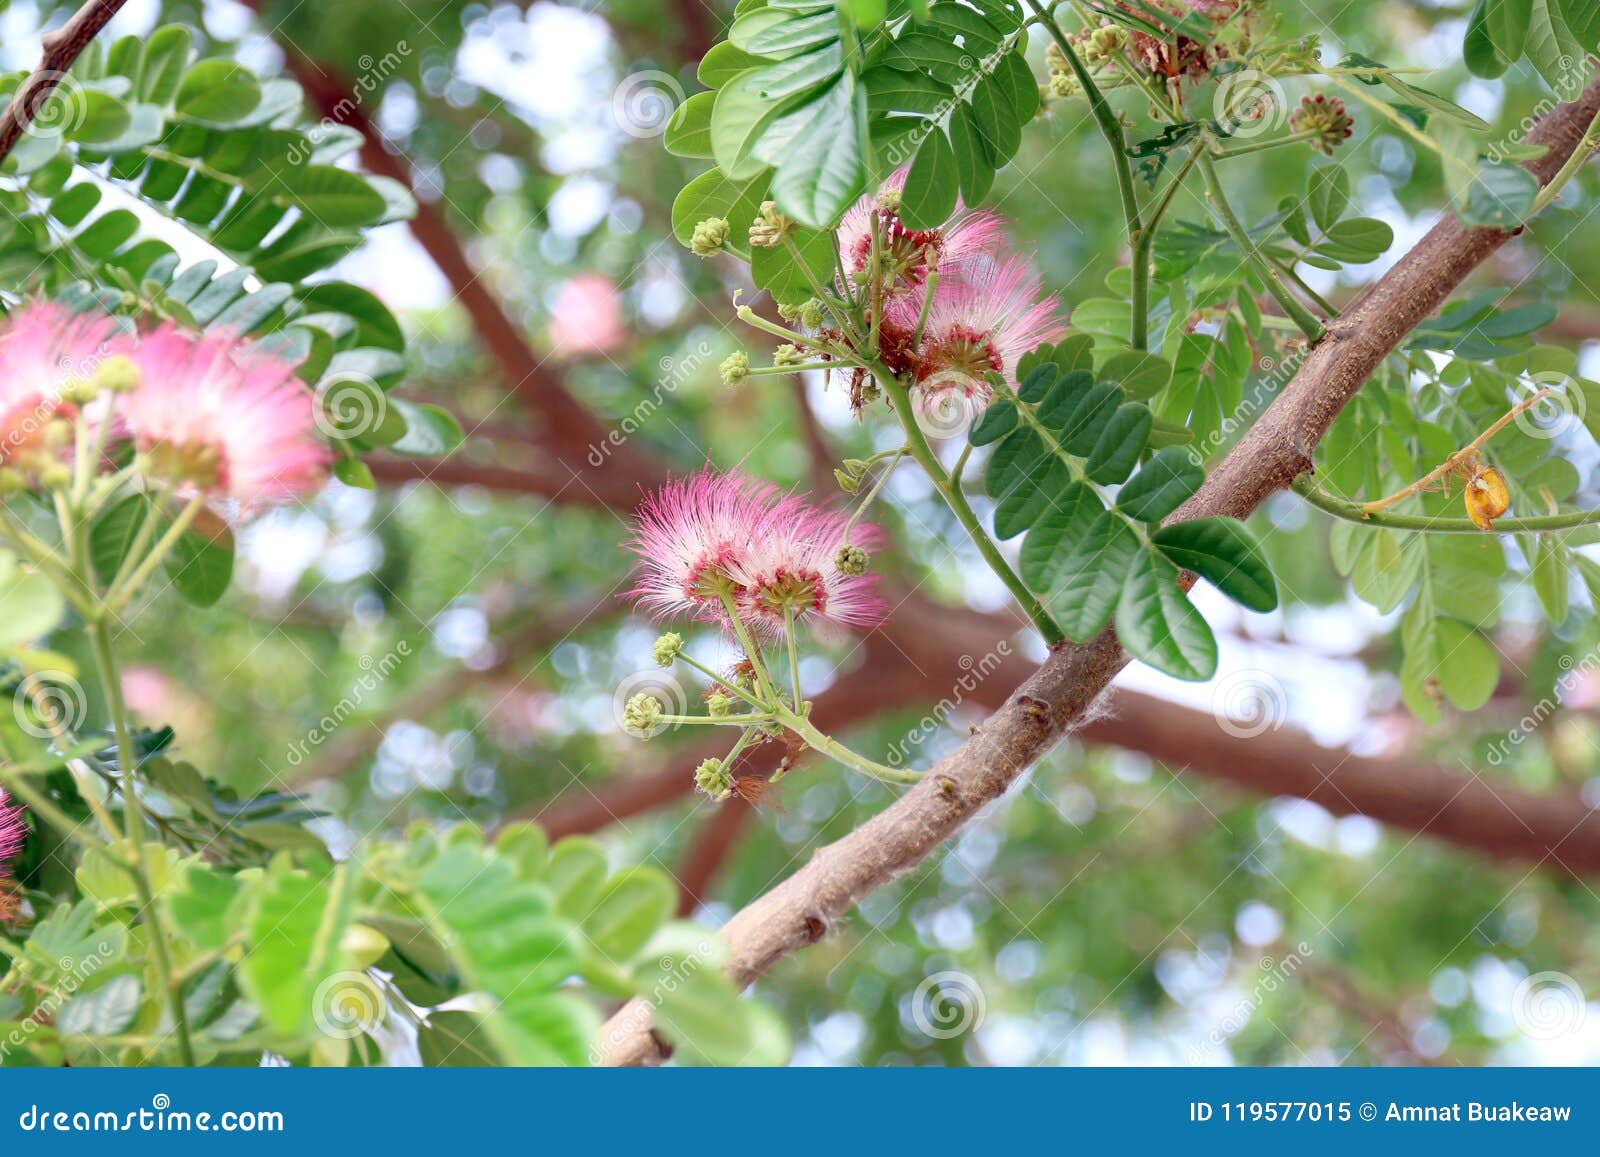 jaam ju ree flower thai word, albizia lebbeck rain tree leguminosae, samanea saman, genus pithecolobium selective focus